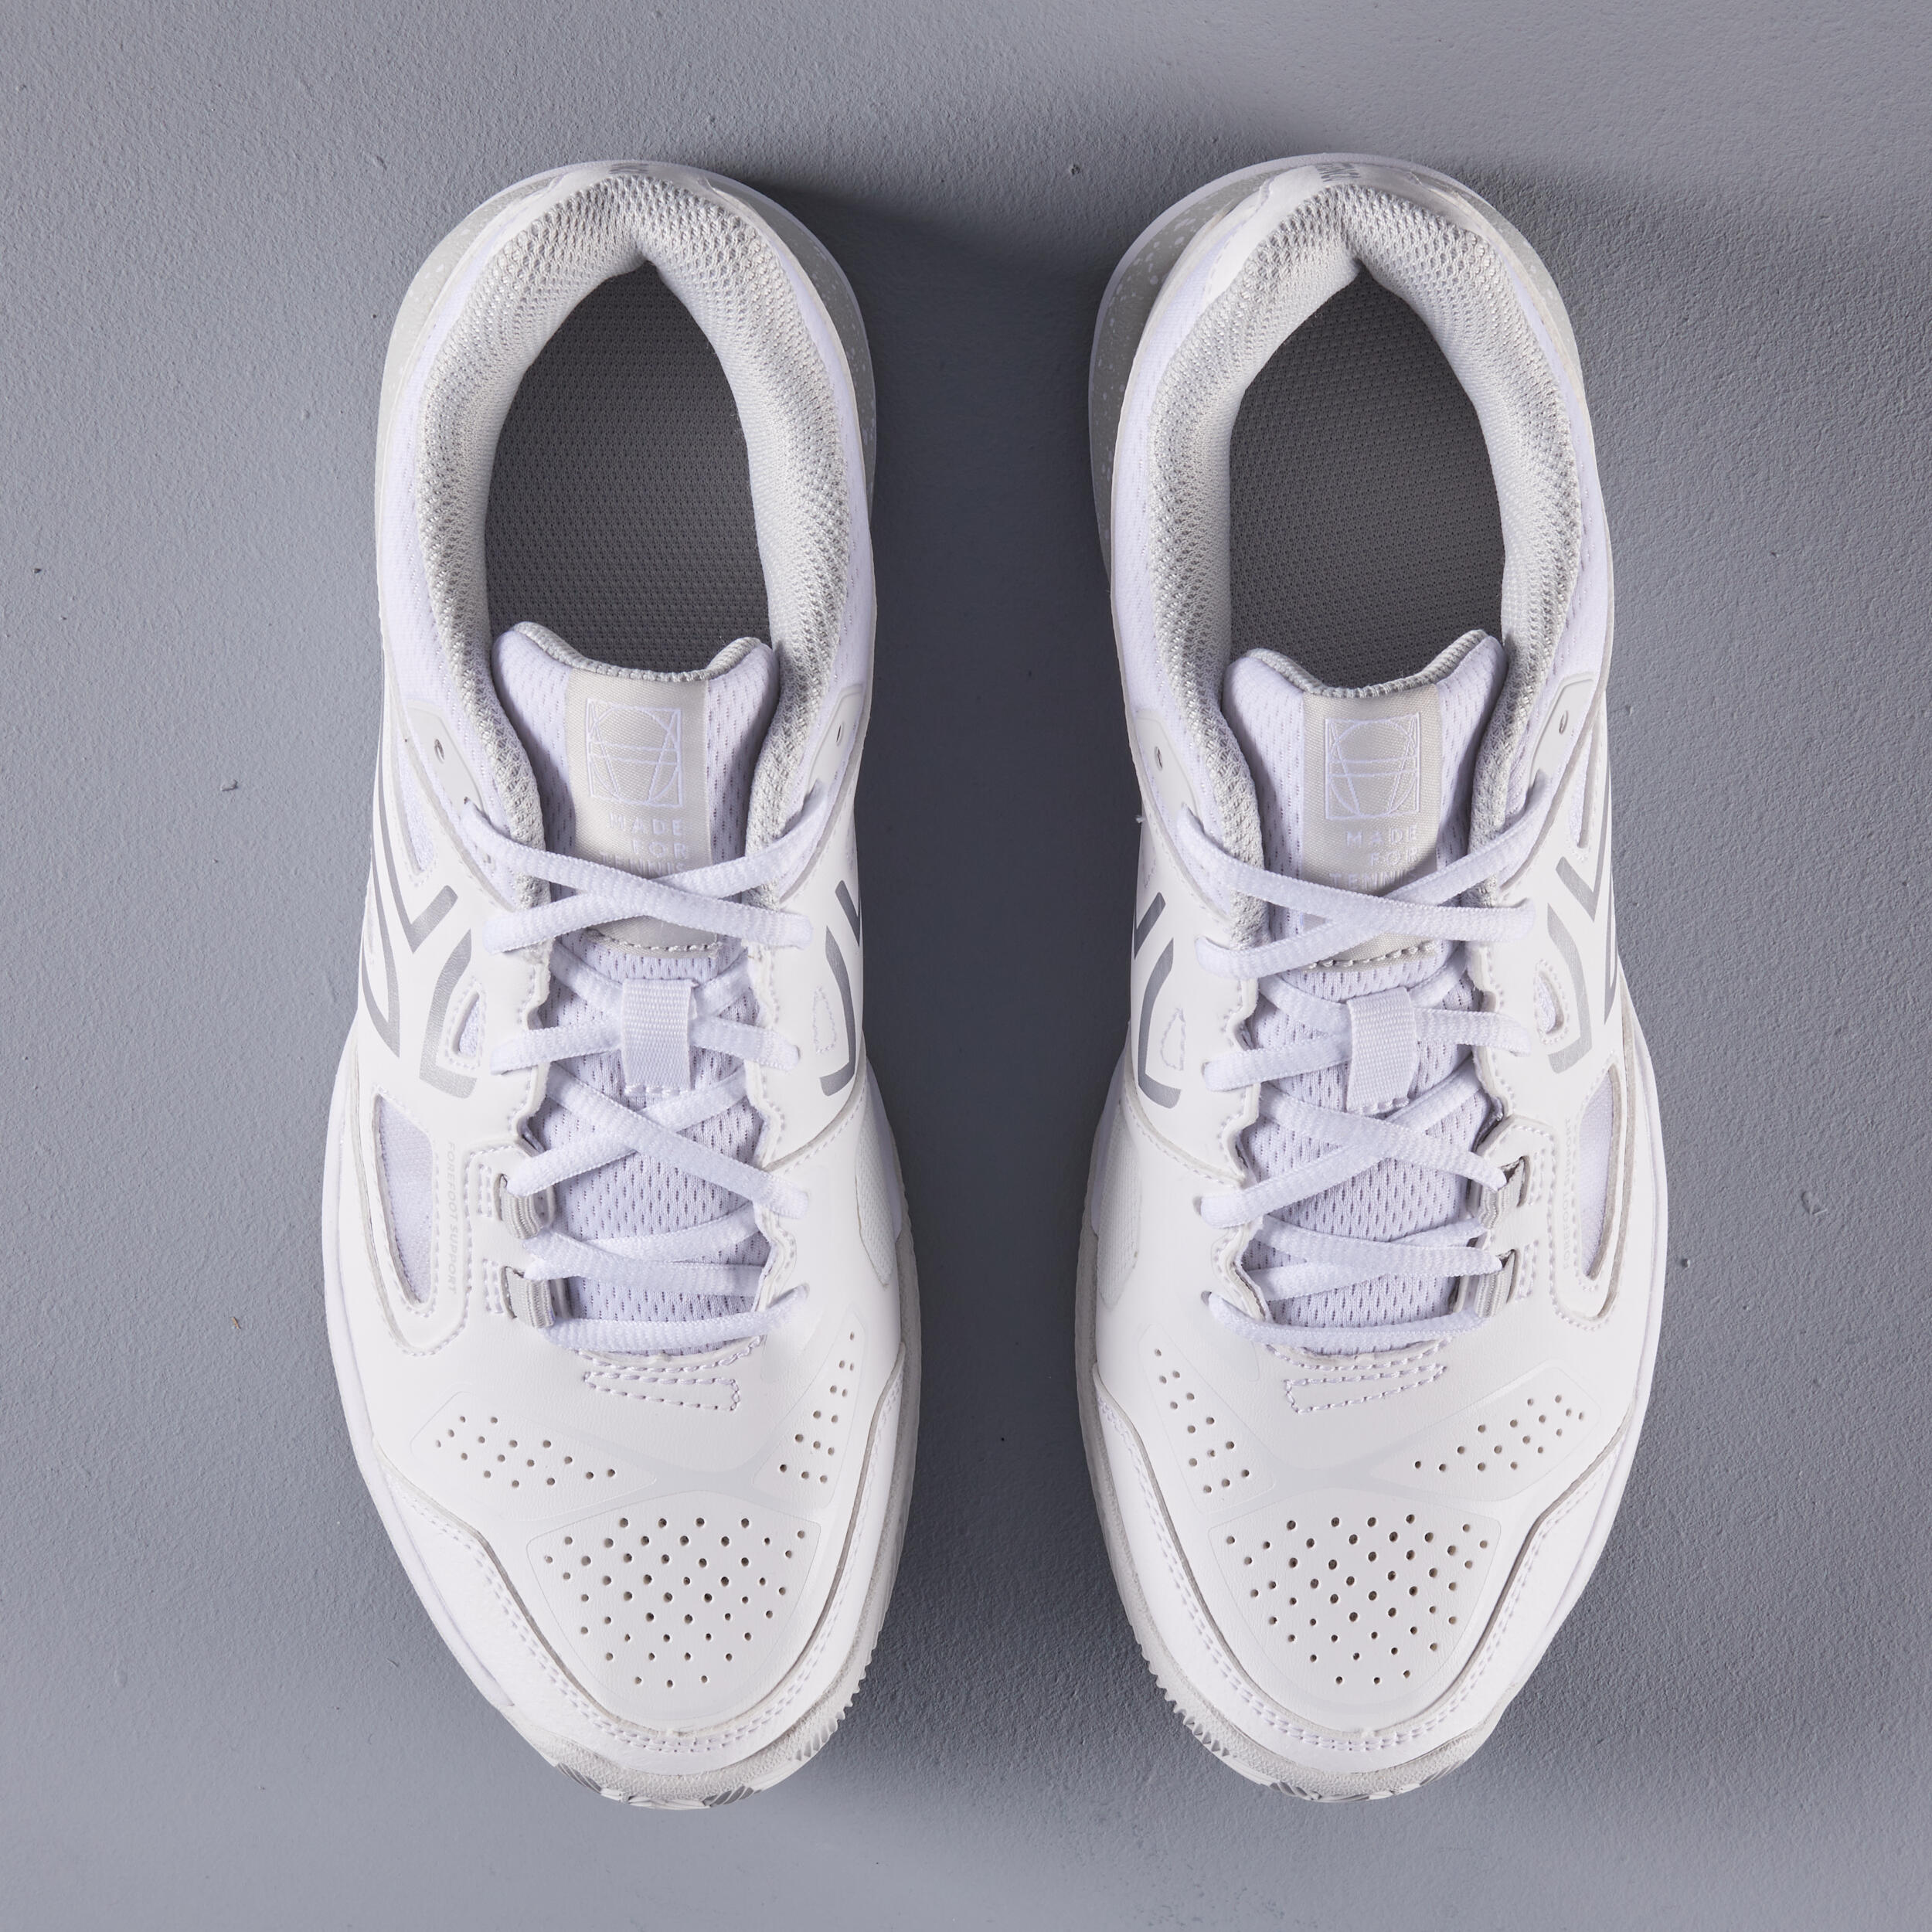 Women's Clay Court Tennis Shoes TS500 - White 5/6